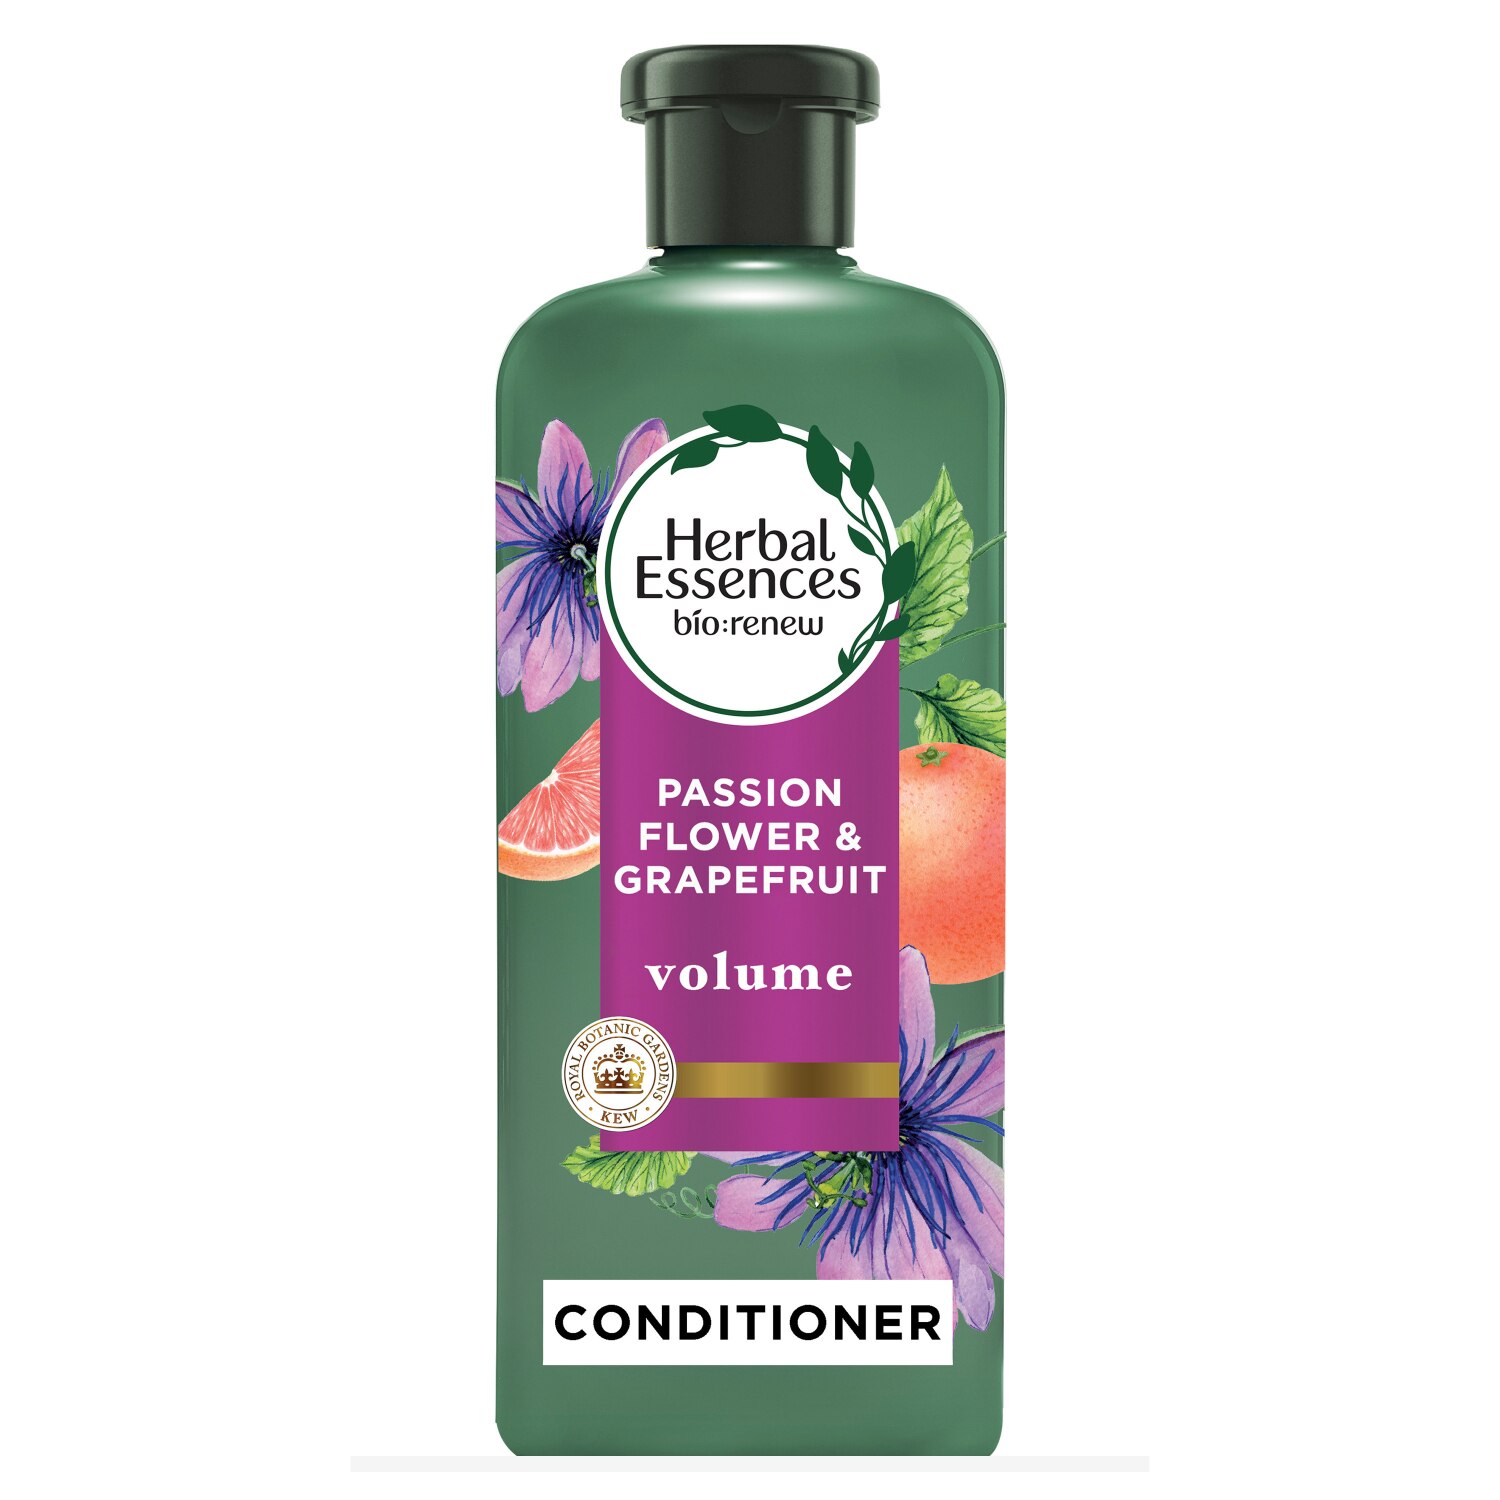 Herbal Essences Passion Flower & Grapefruit Conditioner, 13.5 OZ